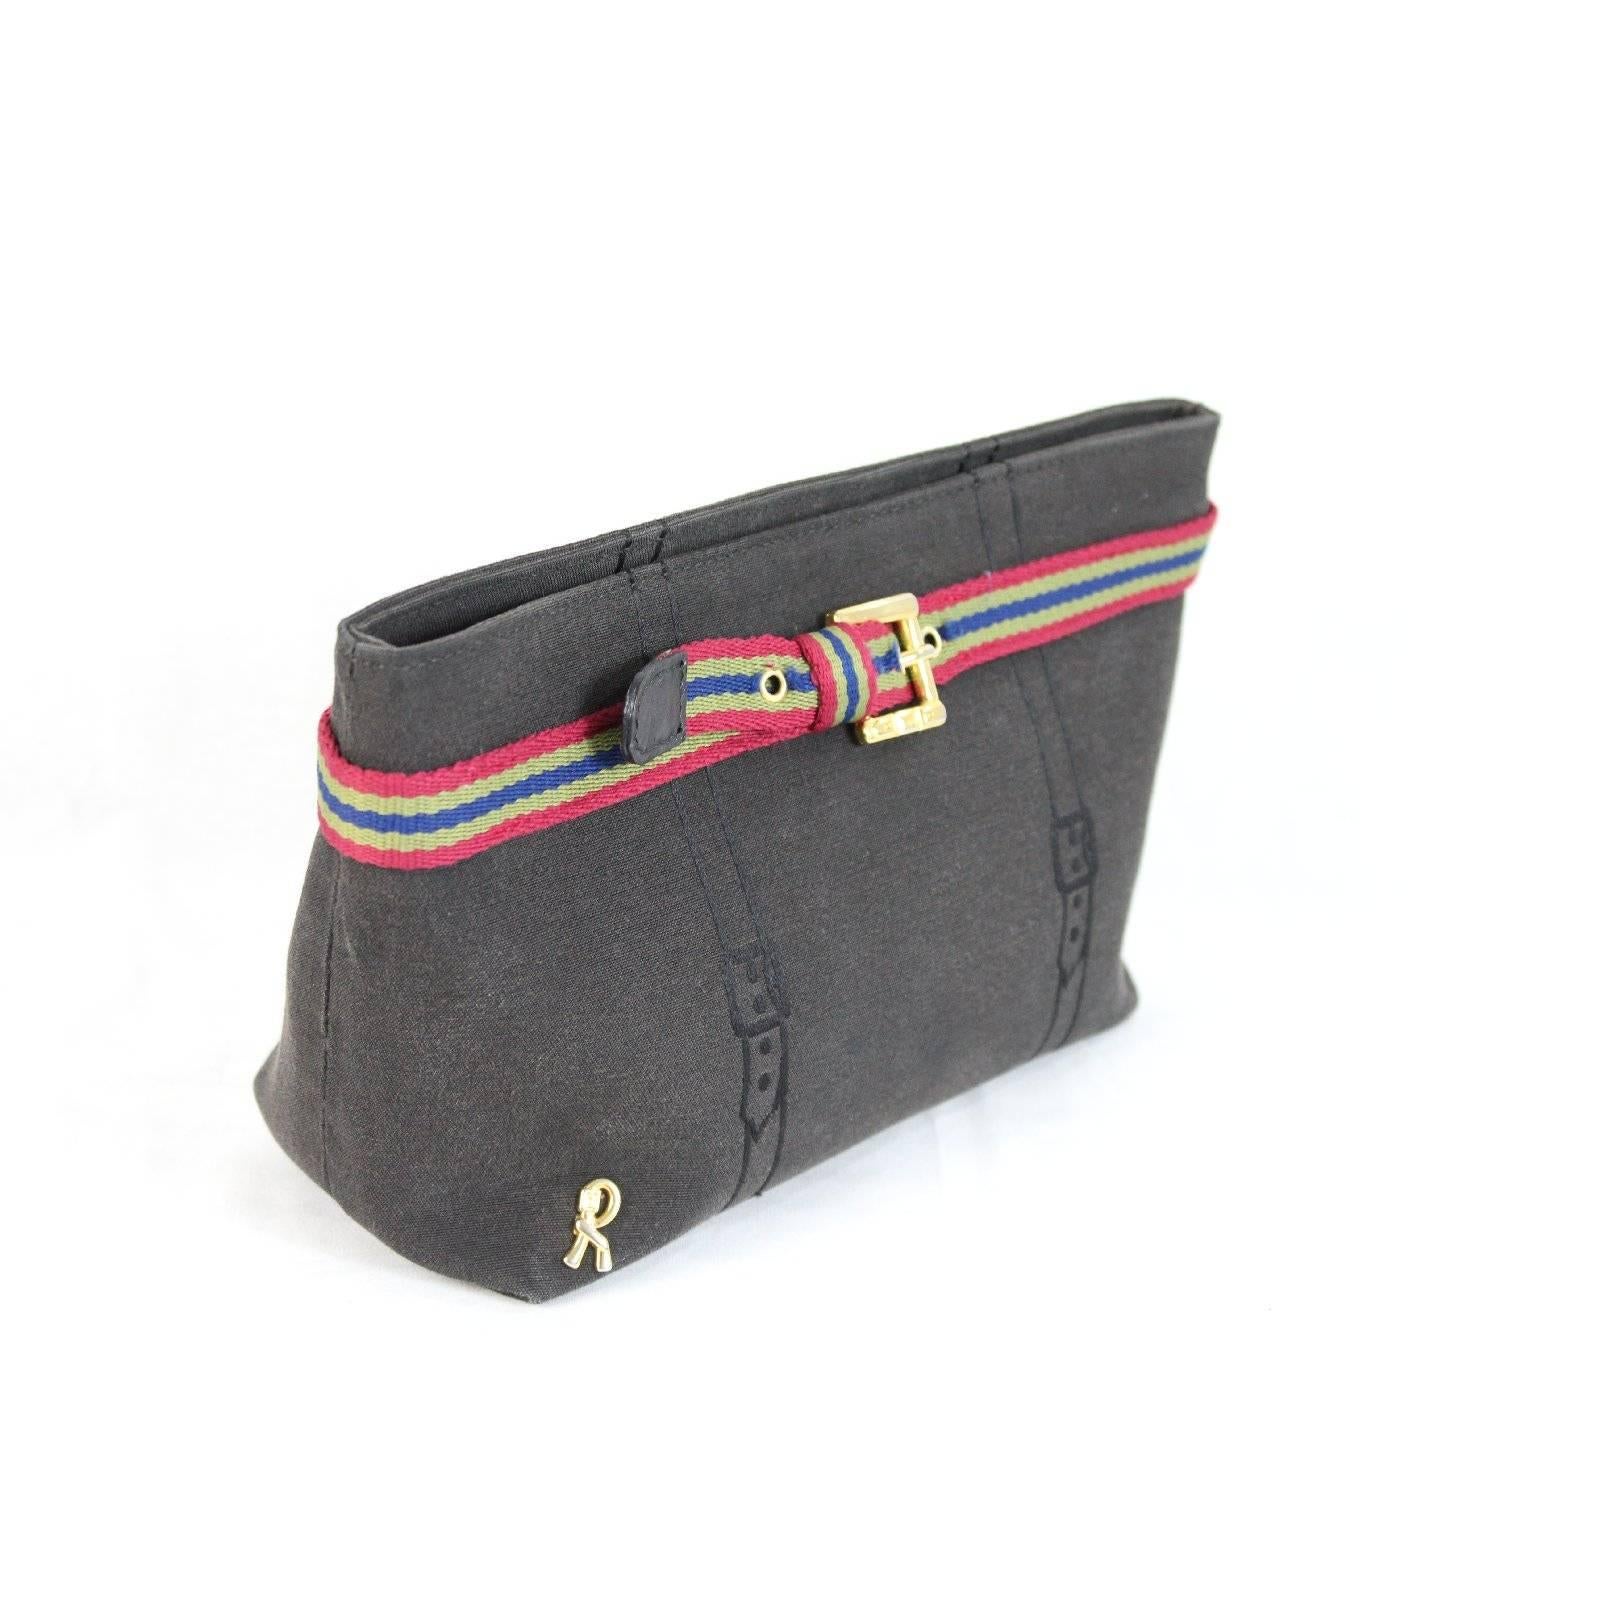 Roberta di Camerino black cotton pochette clutche with zip and strap.

Length: 29 cm
Depth: 9 cm

Color: black
Composition: cotton
Condition: Excellent condition